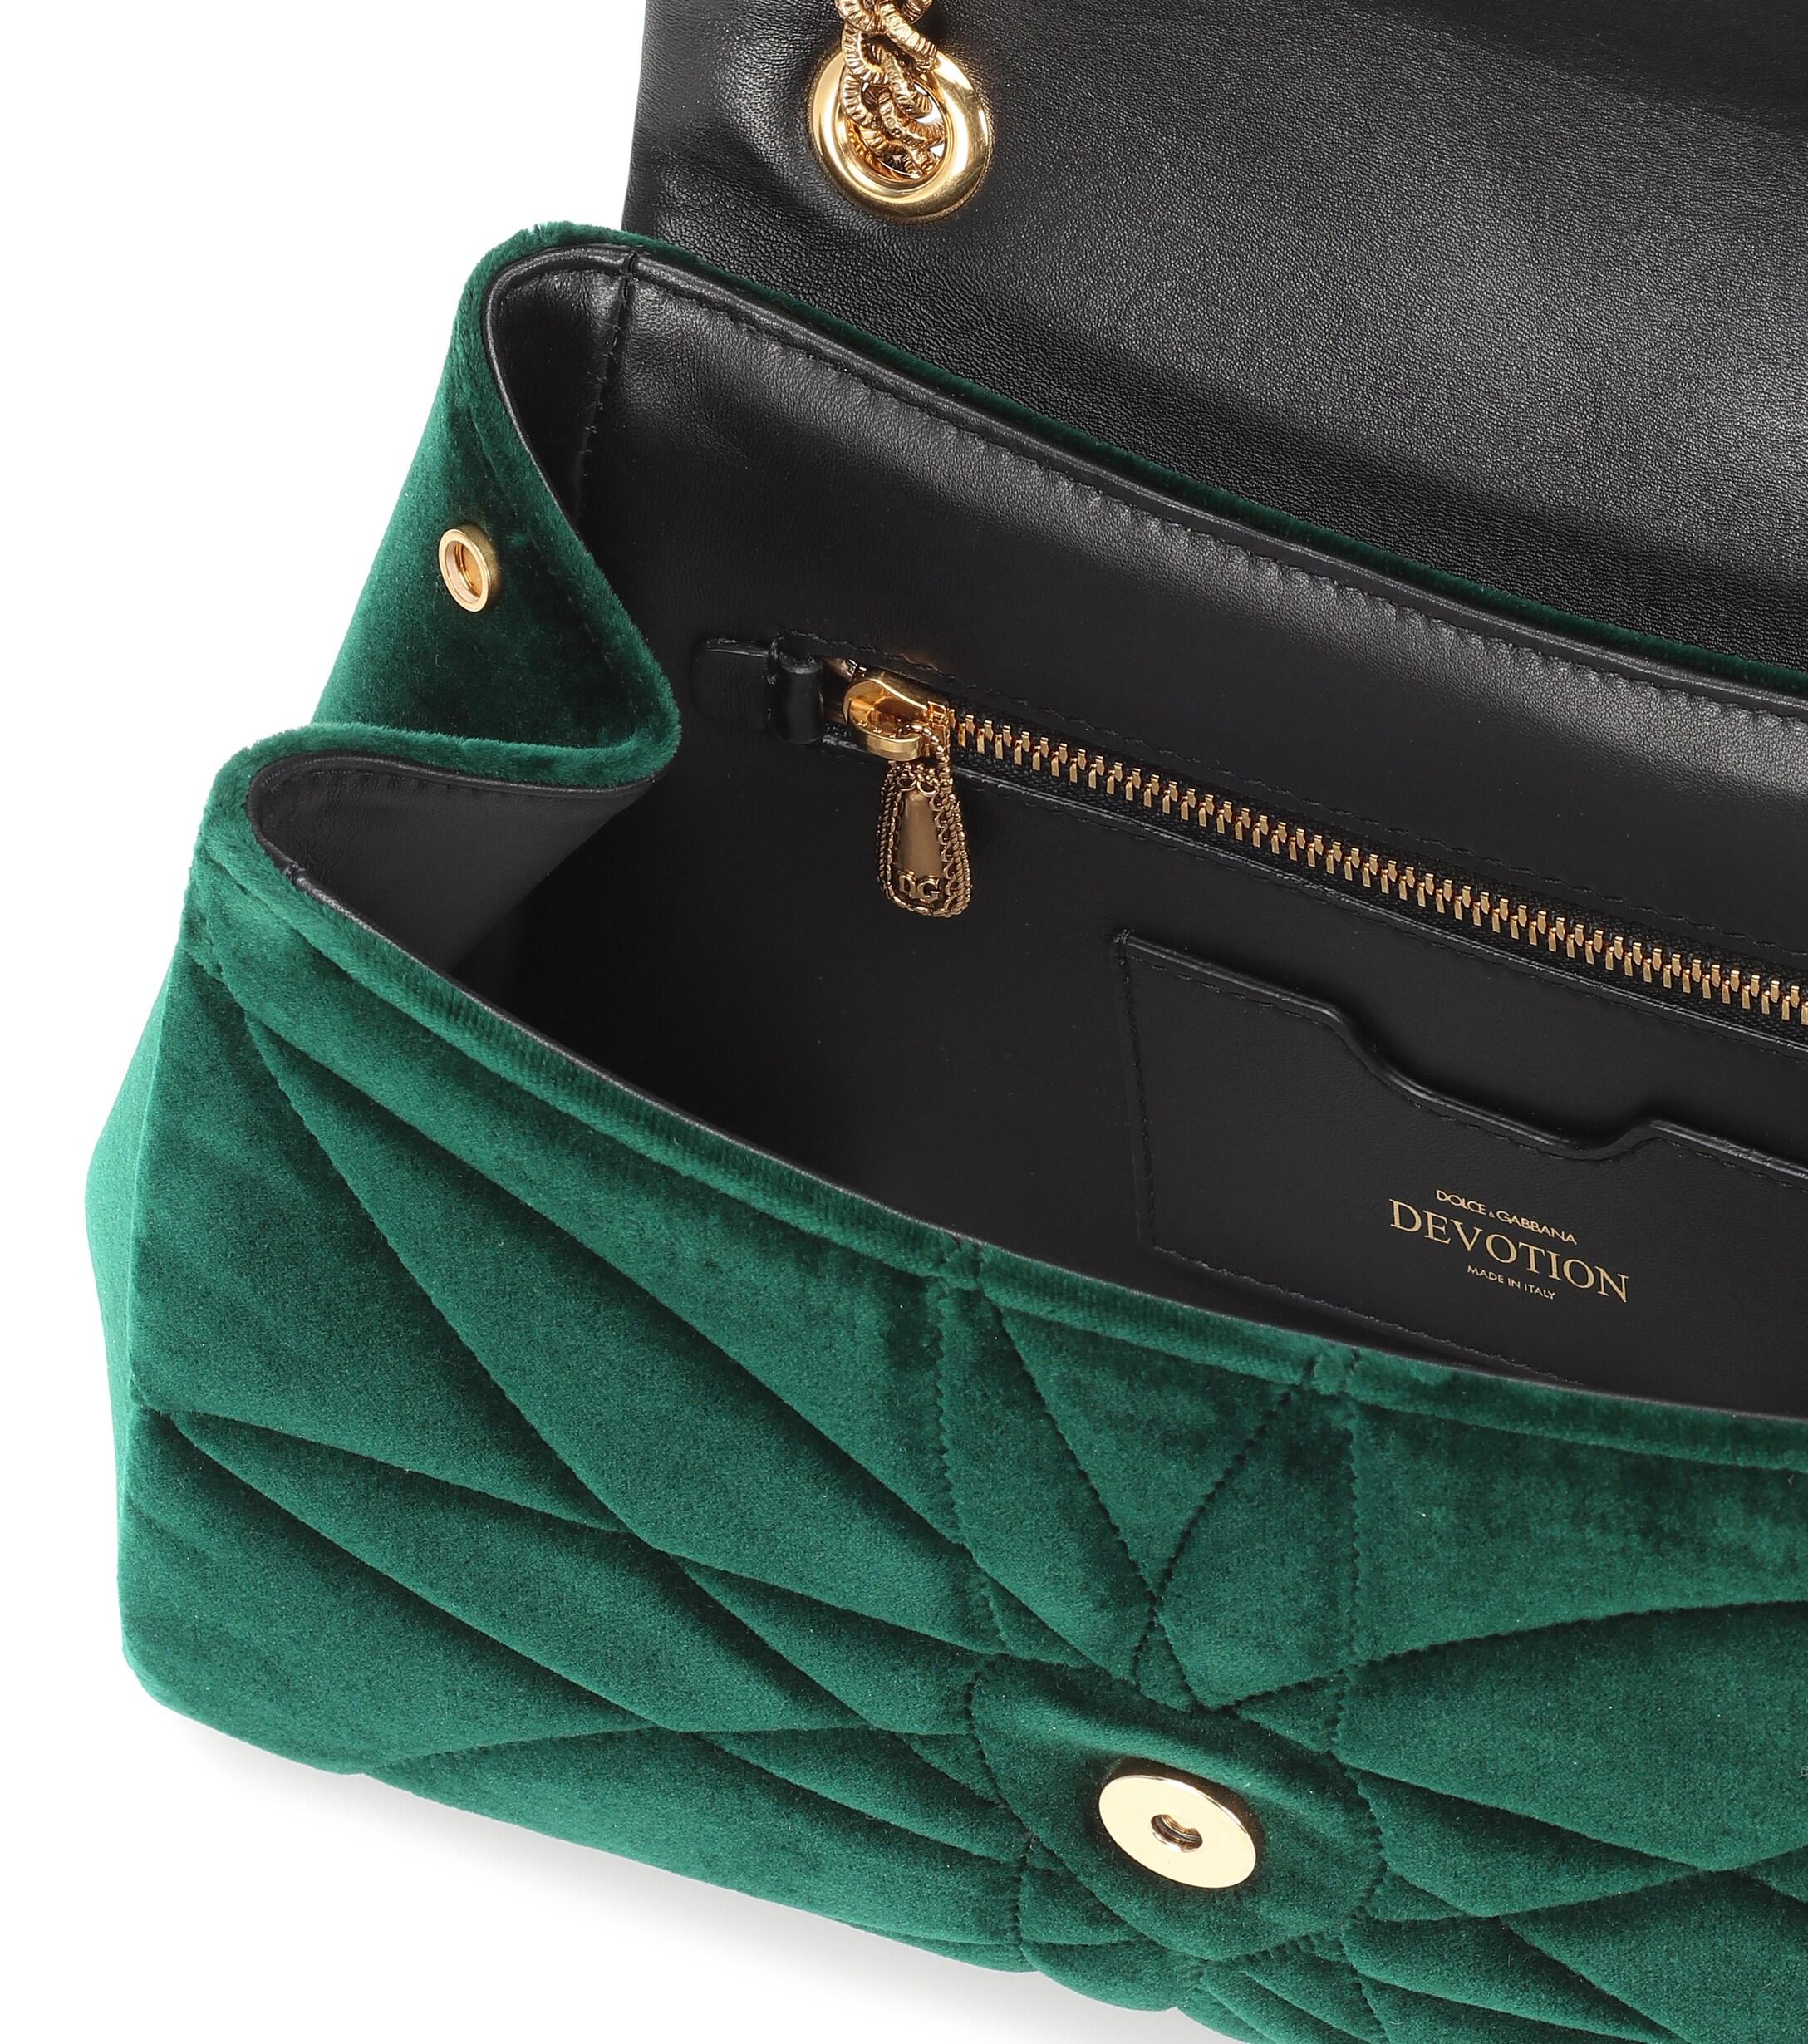 Dolce & Gabbana Devotion Velvet Shoulder Bag in Green